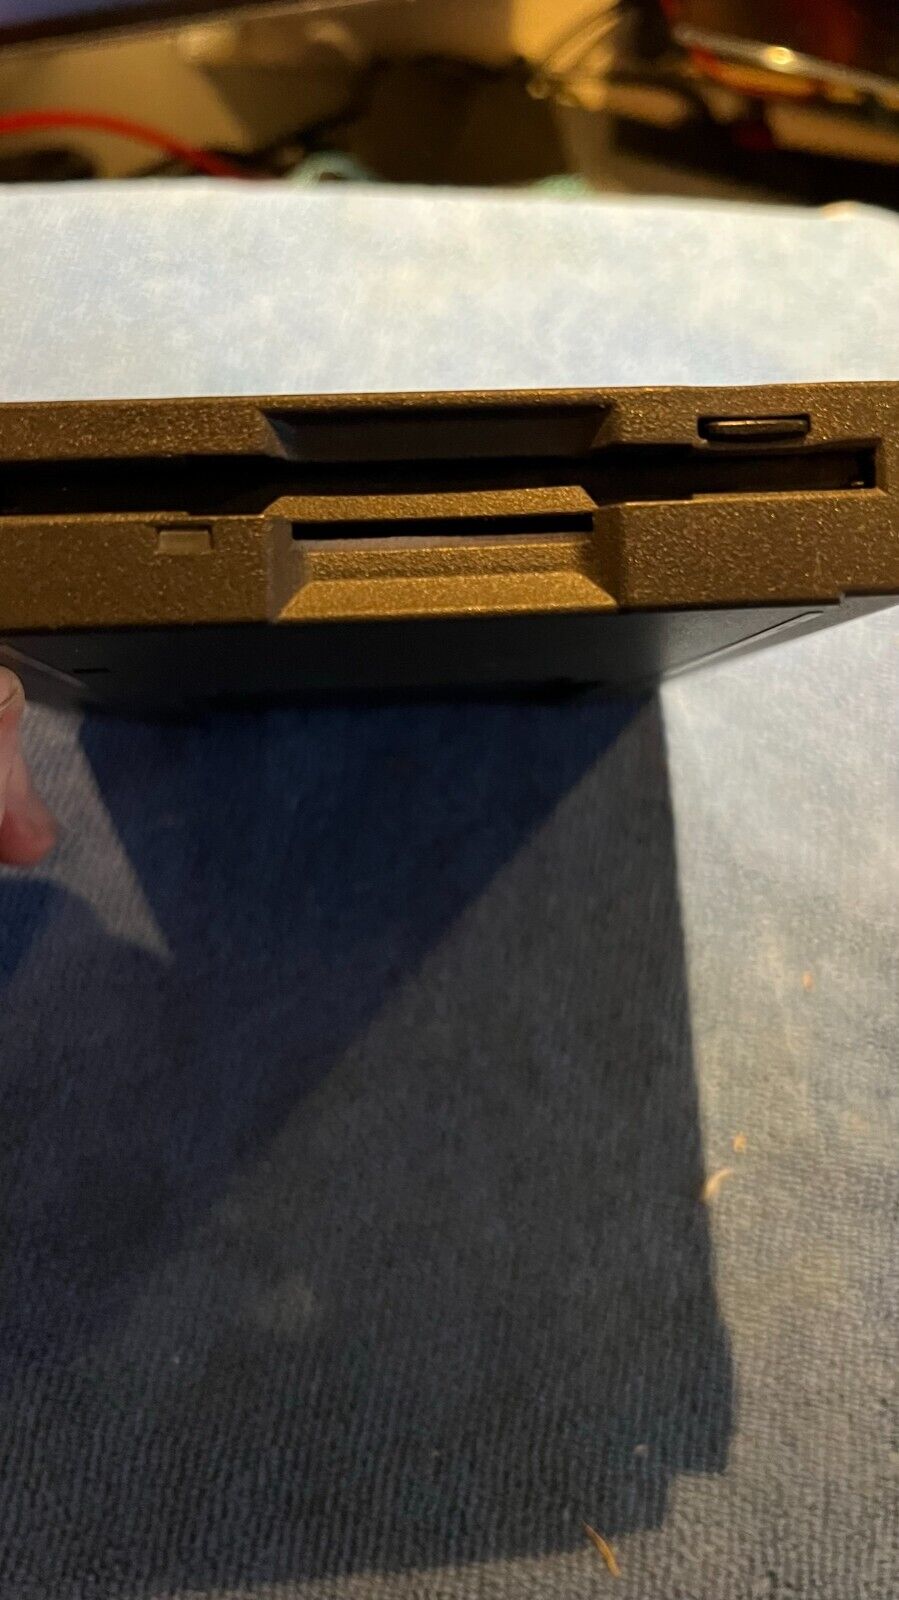 Panasonic Toughbook CF-27 Genuine Panasonic internal Floppy Drive *UNTESTED*